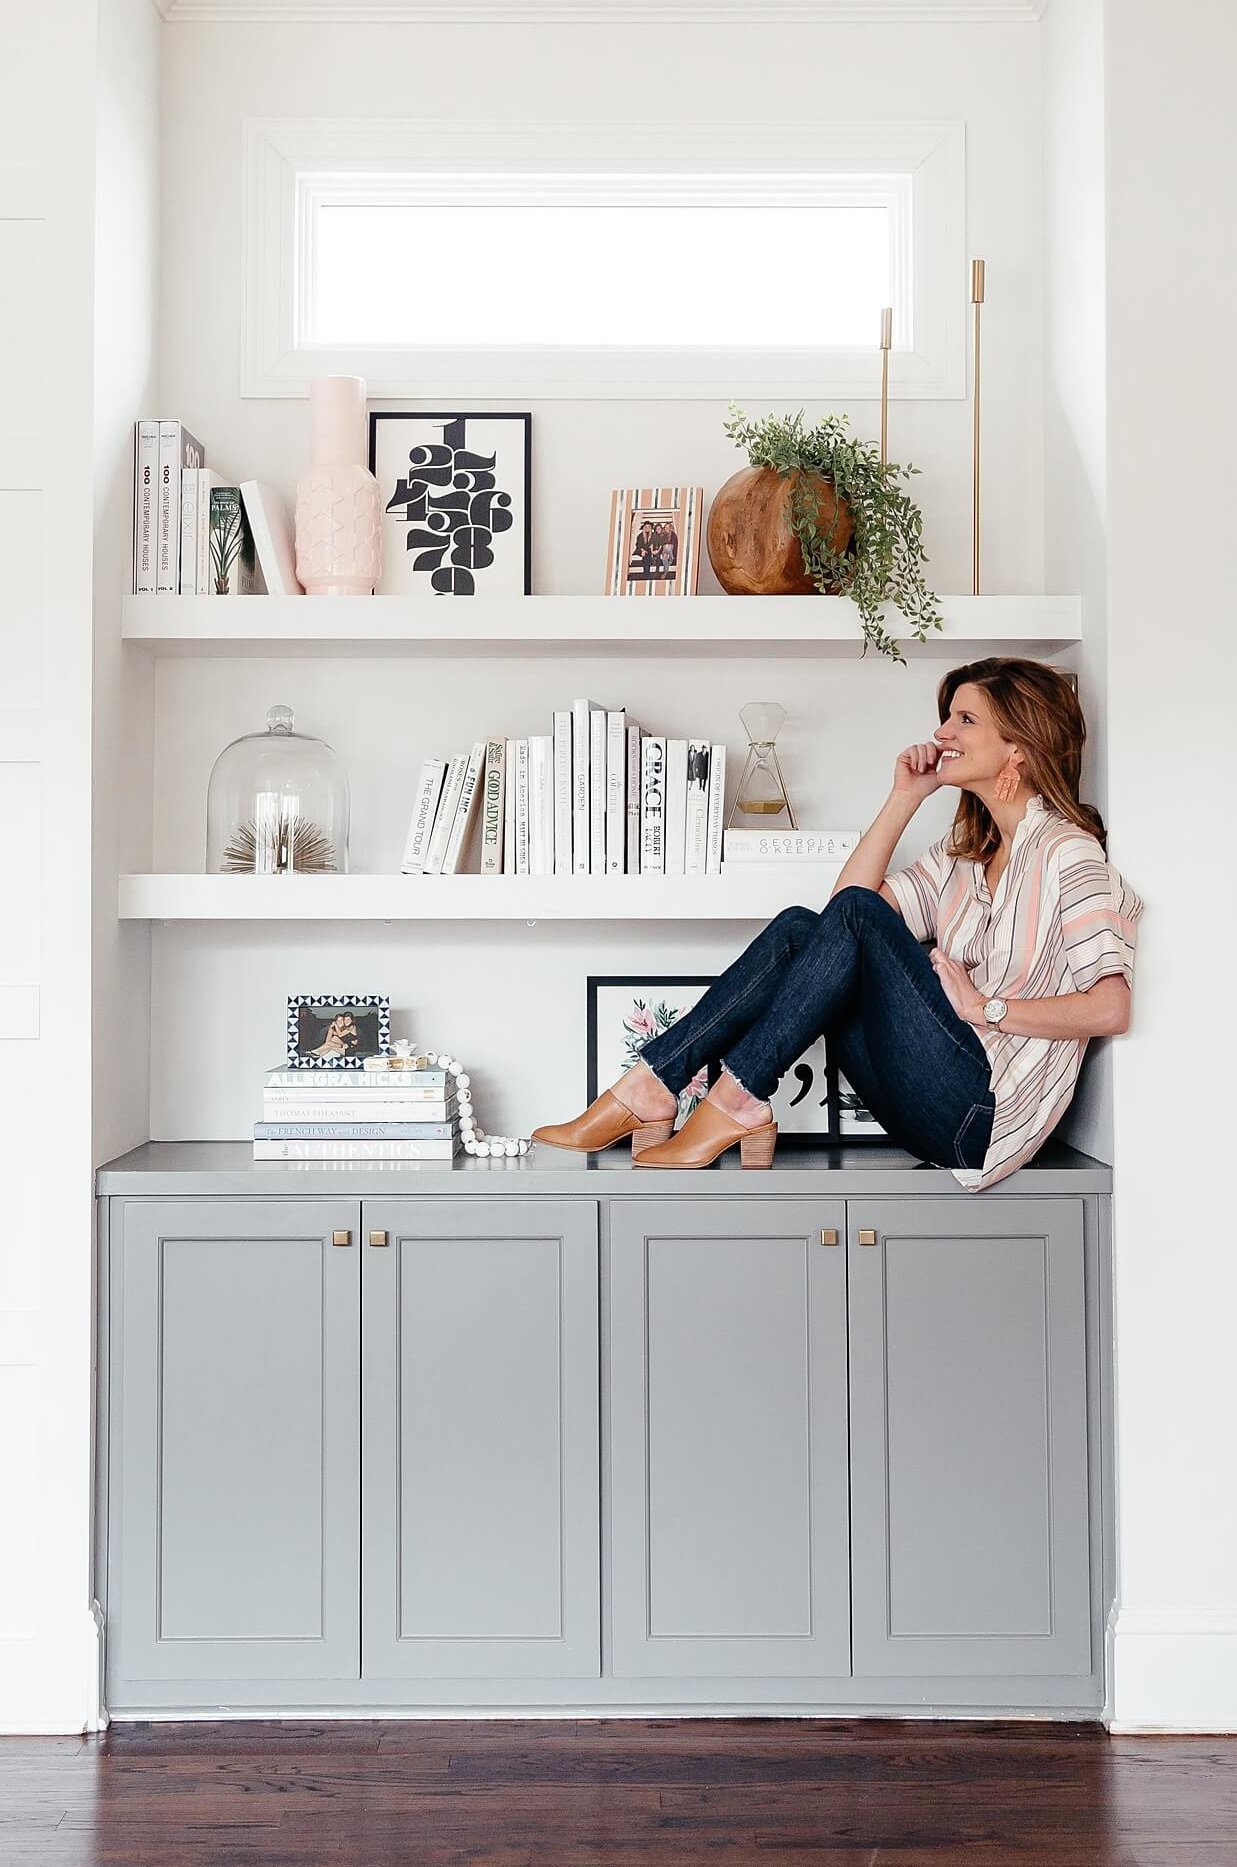 brighton keller sitting on living room bookshelves, Sherwin Williams Chelsea Grey Paint color on cabinets